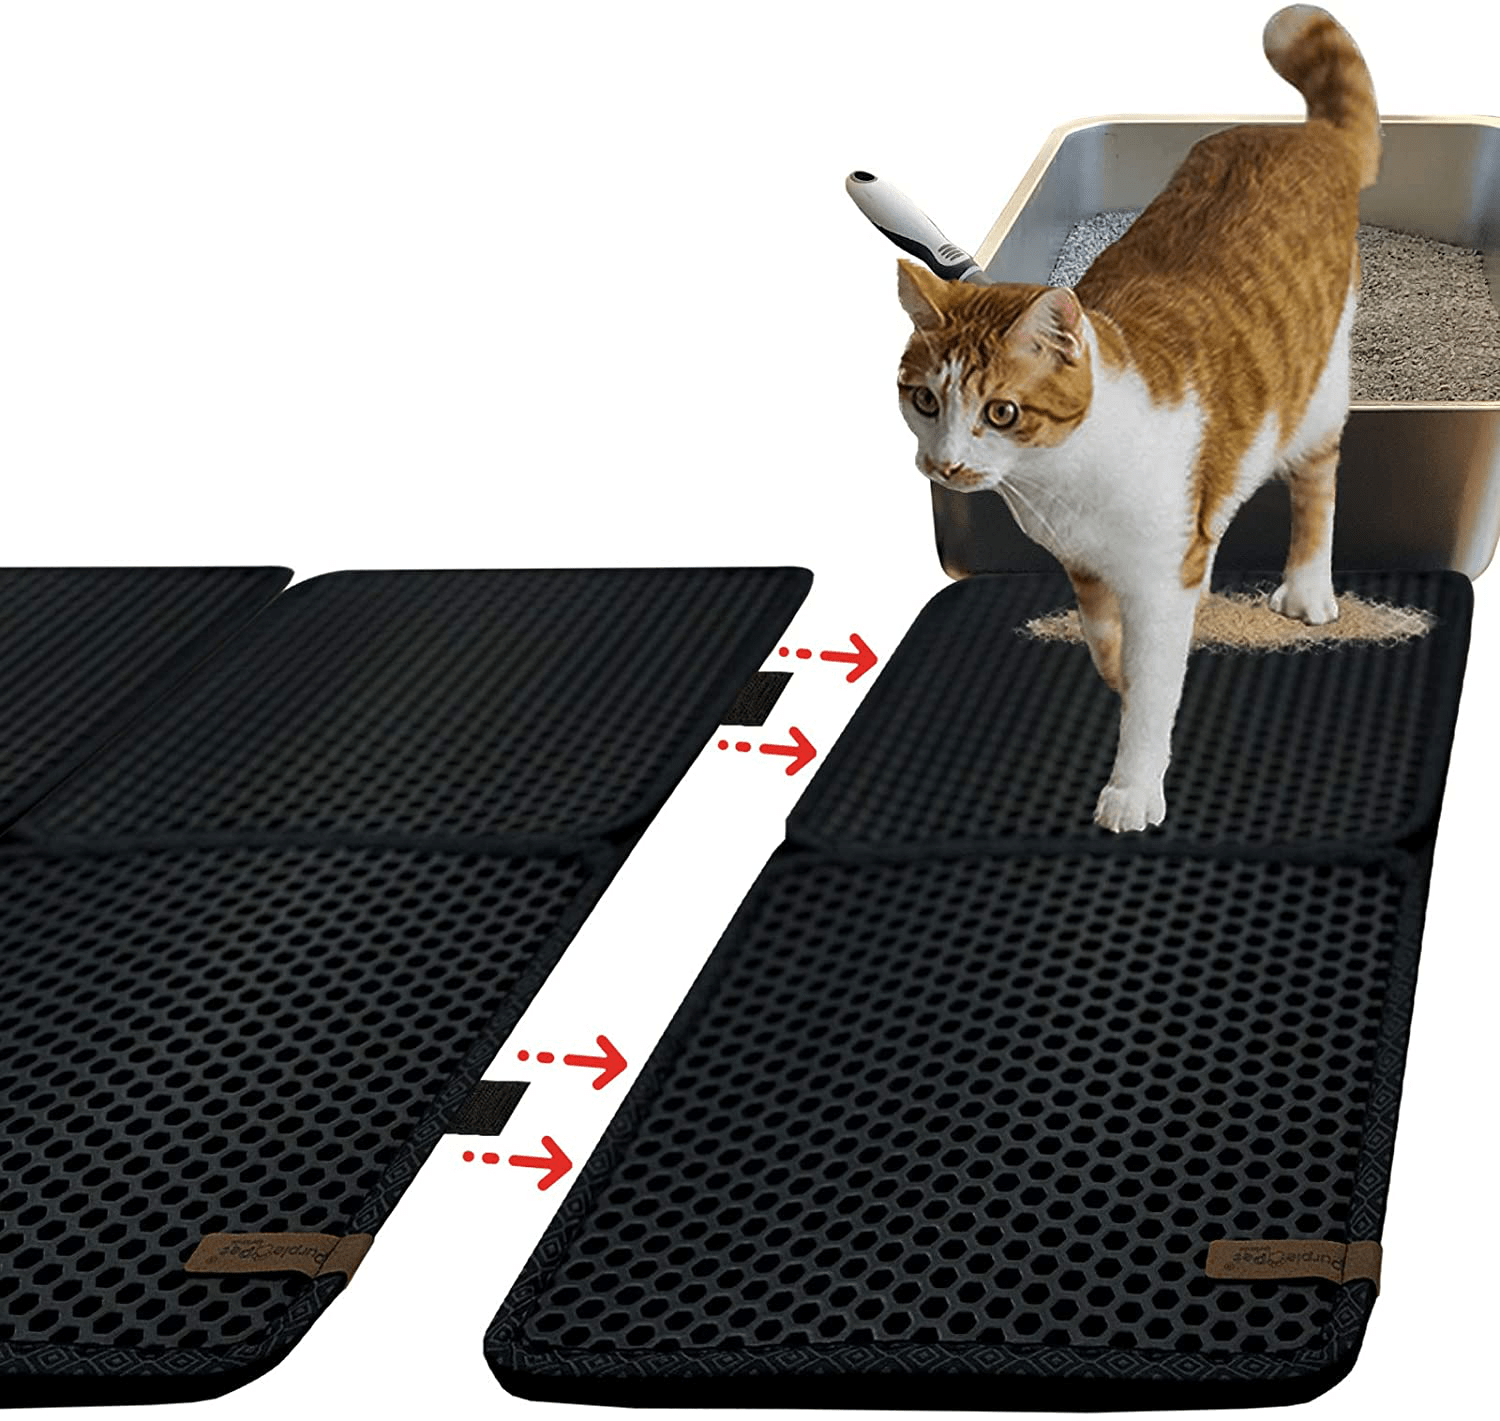 Large Cat Litter Box Mat Slip Resistant Waterproof Kitty Trapping Mat